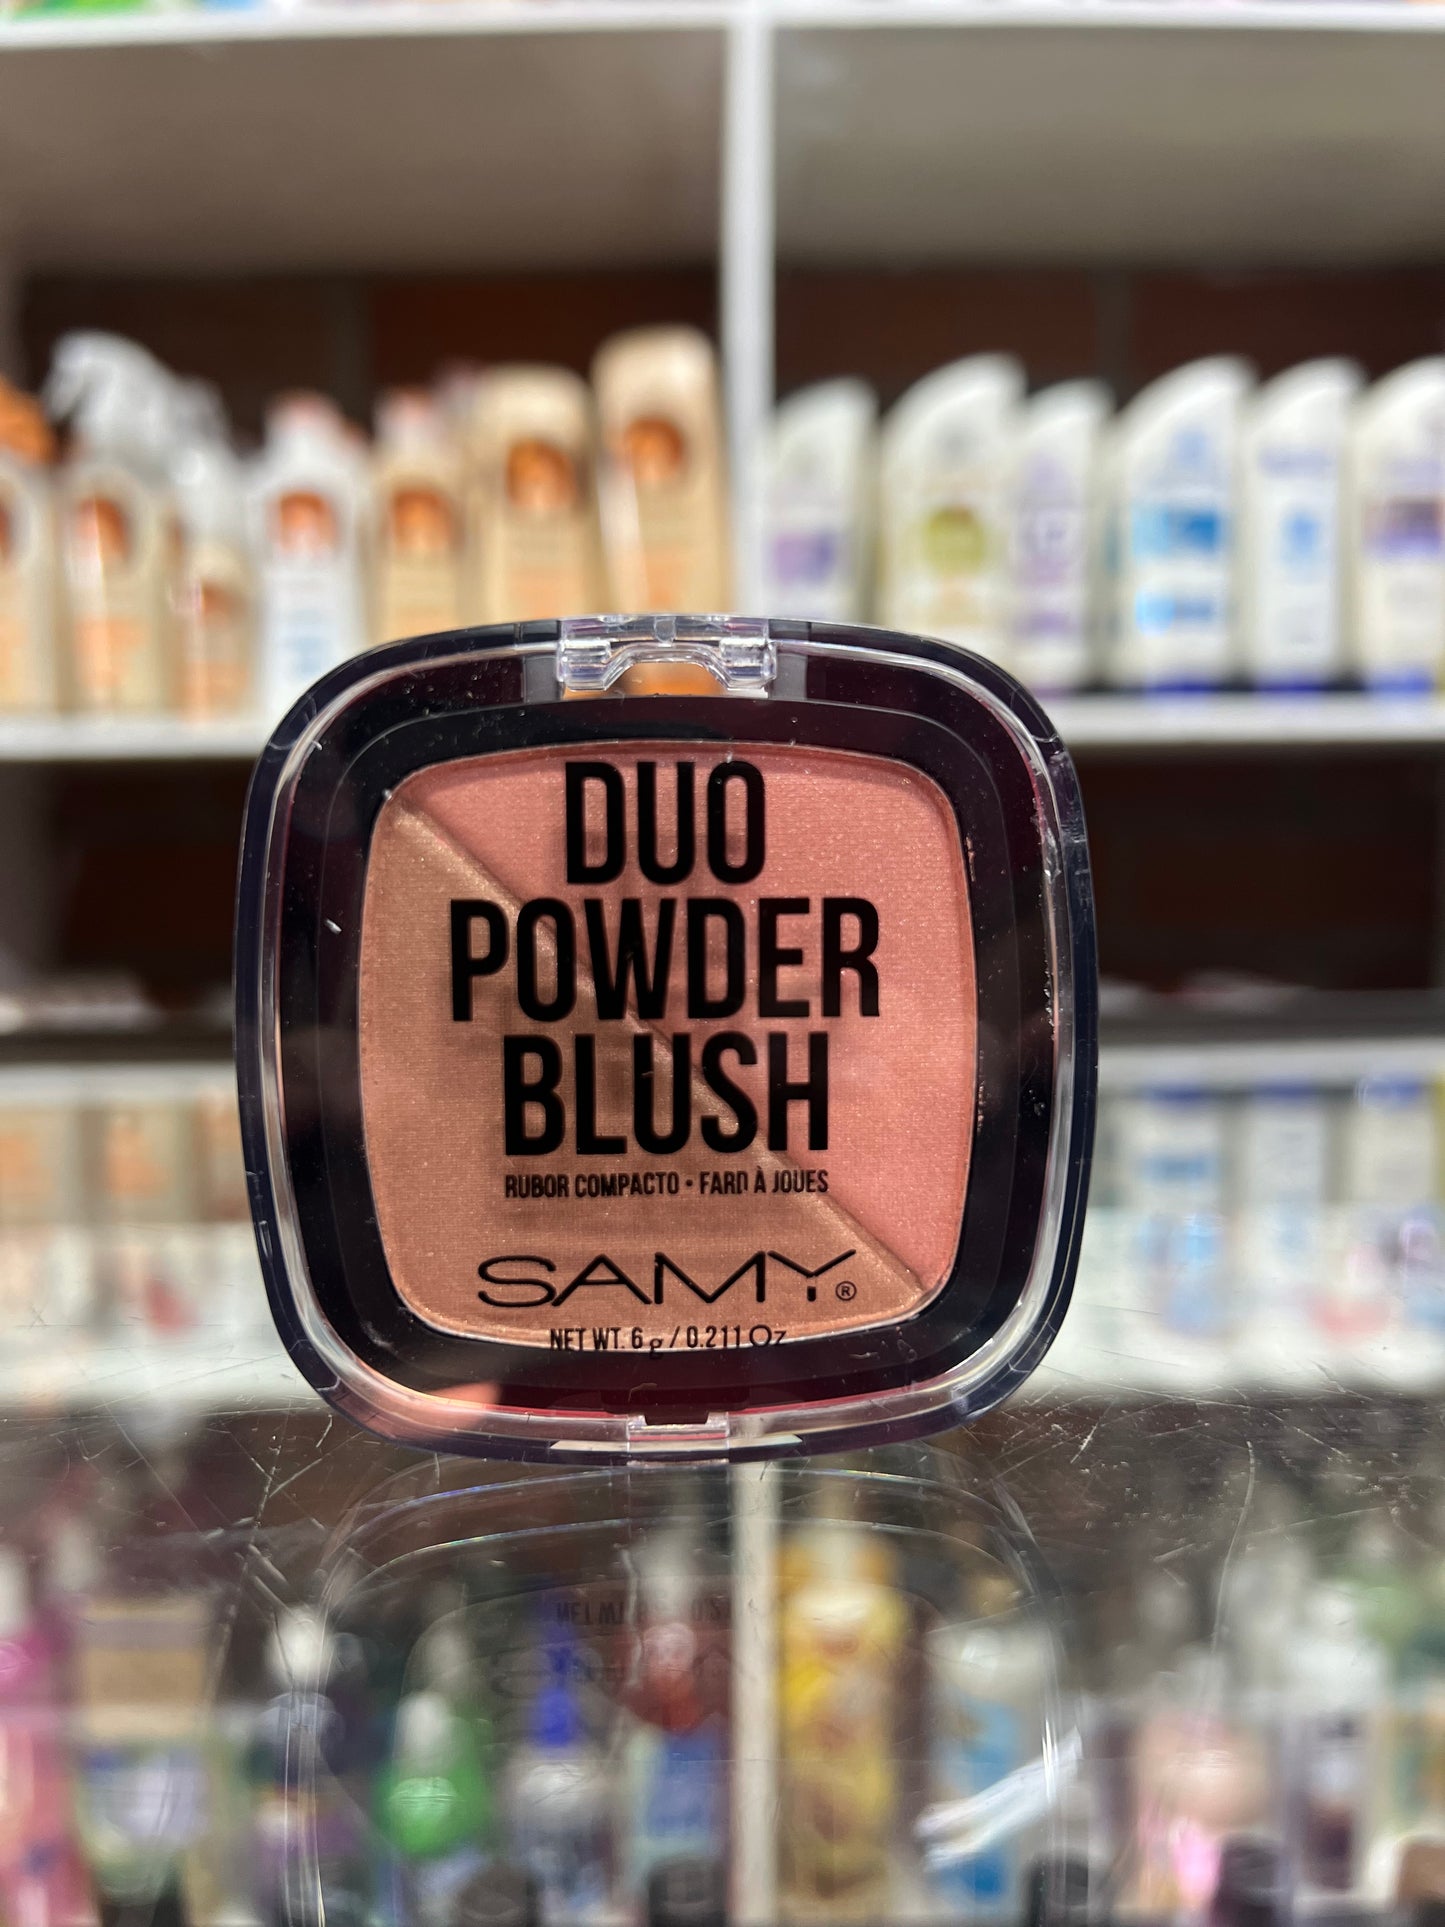 Rubor compacto duo powder blush samy